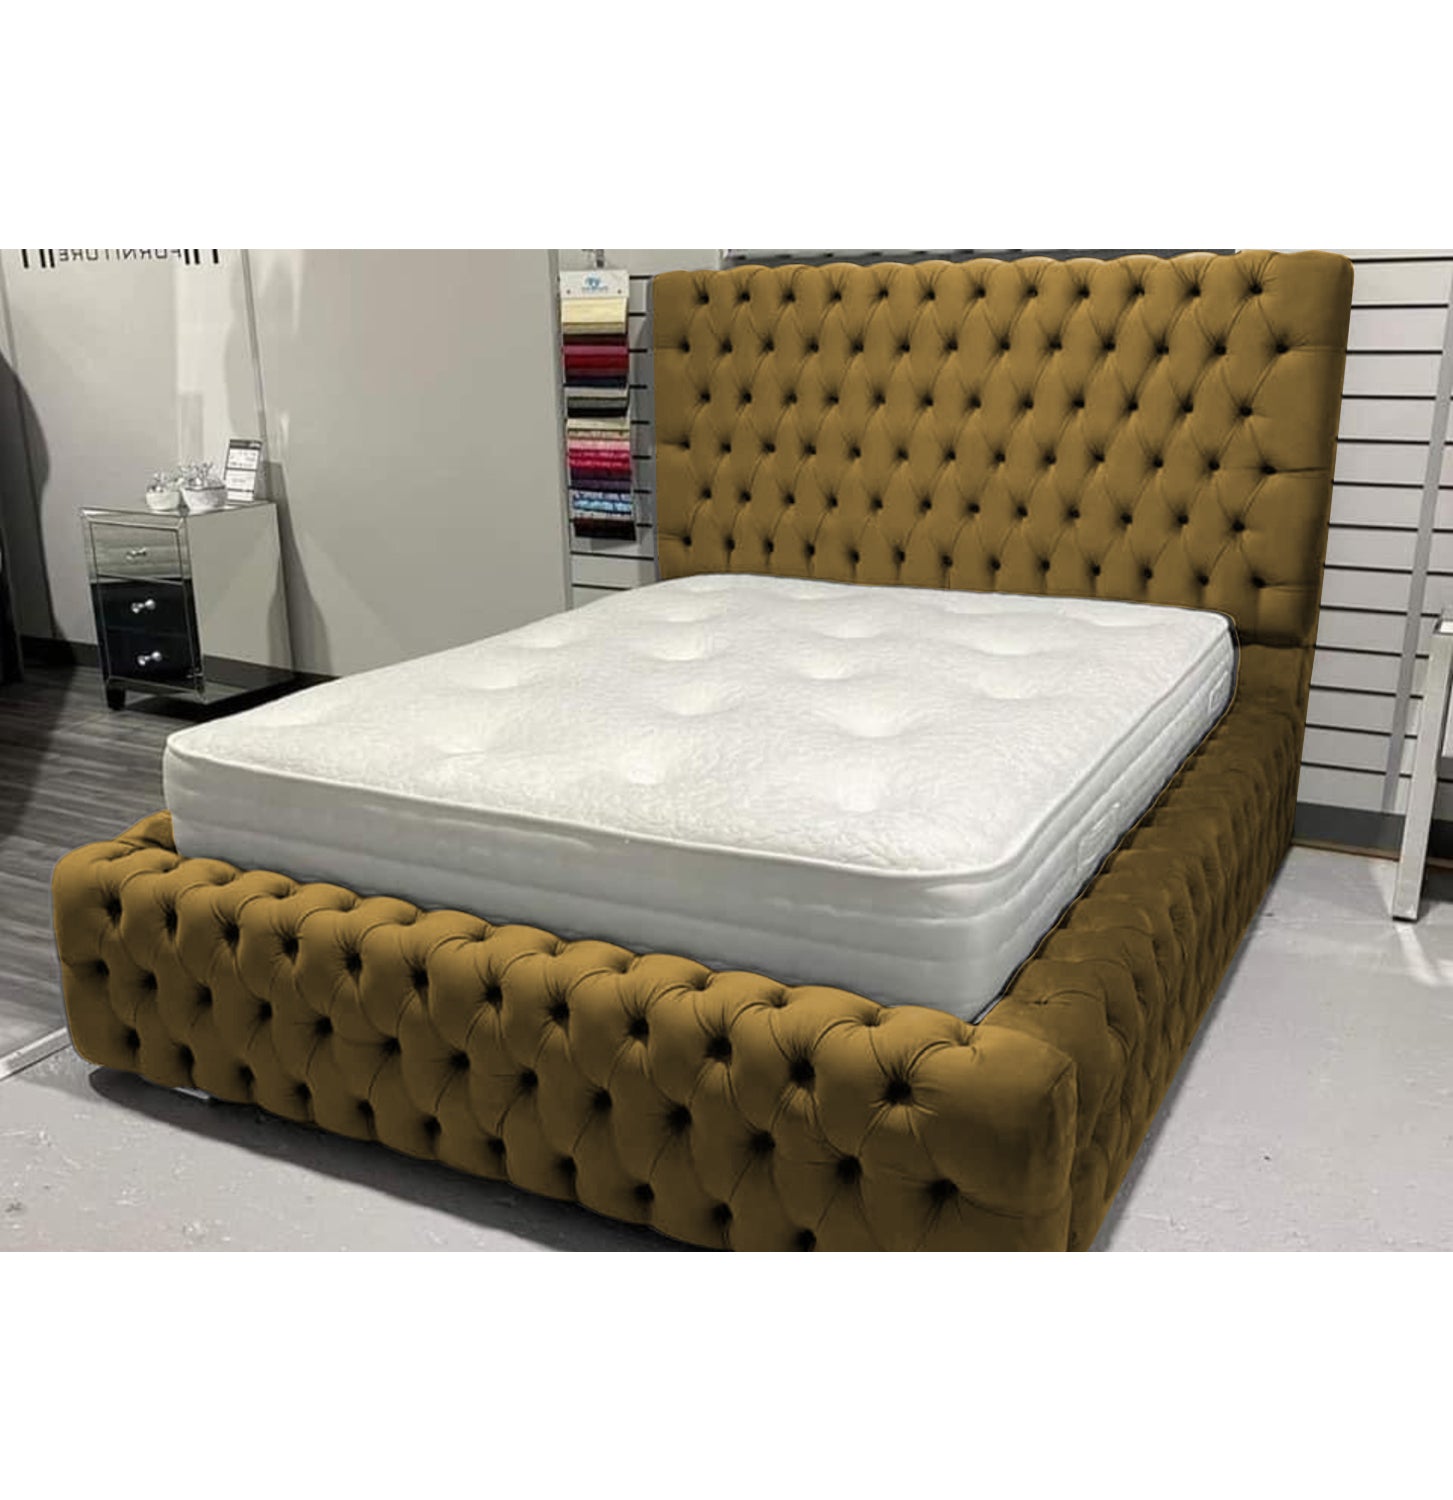 The Stlouis Upholstered Bed Frame